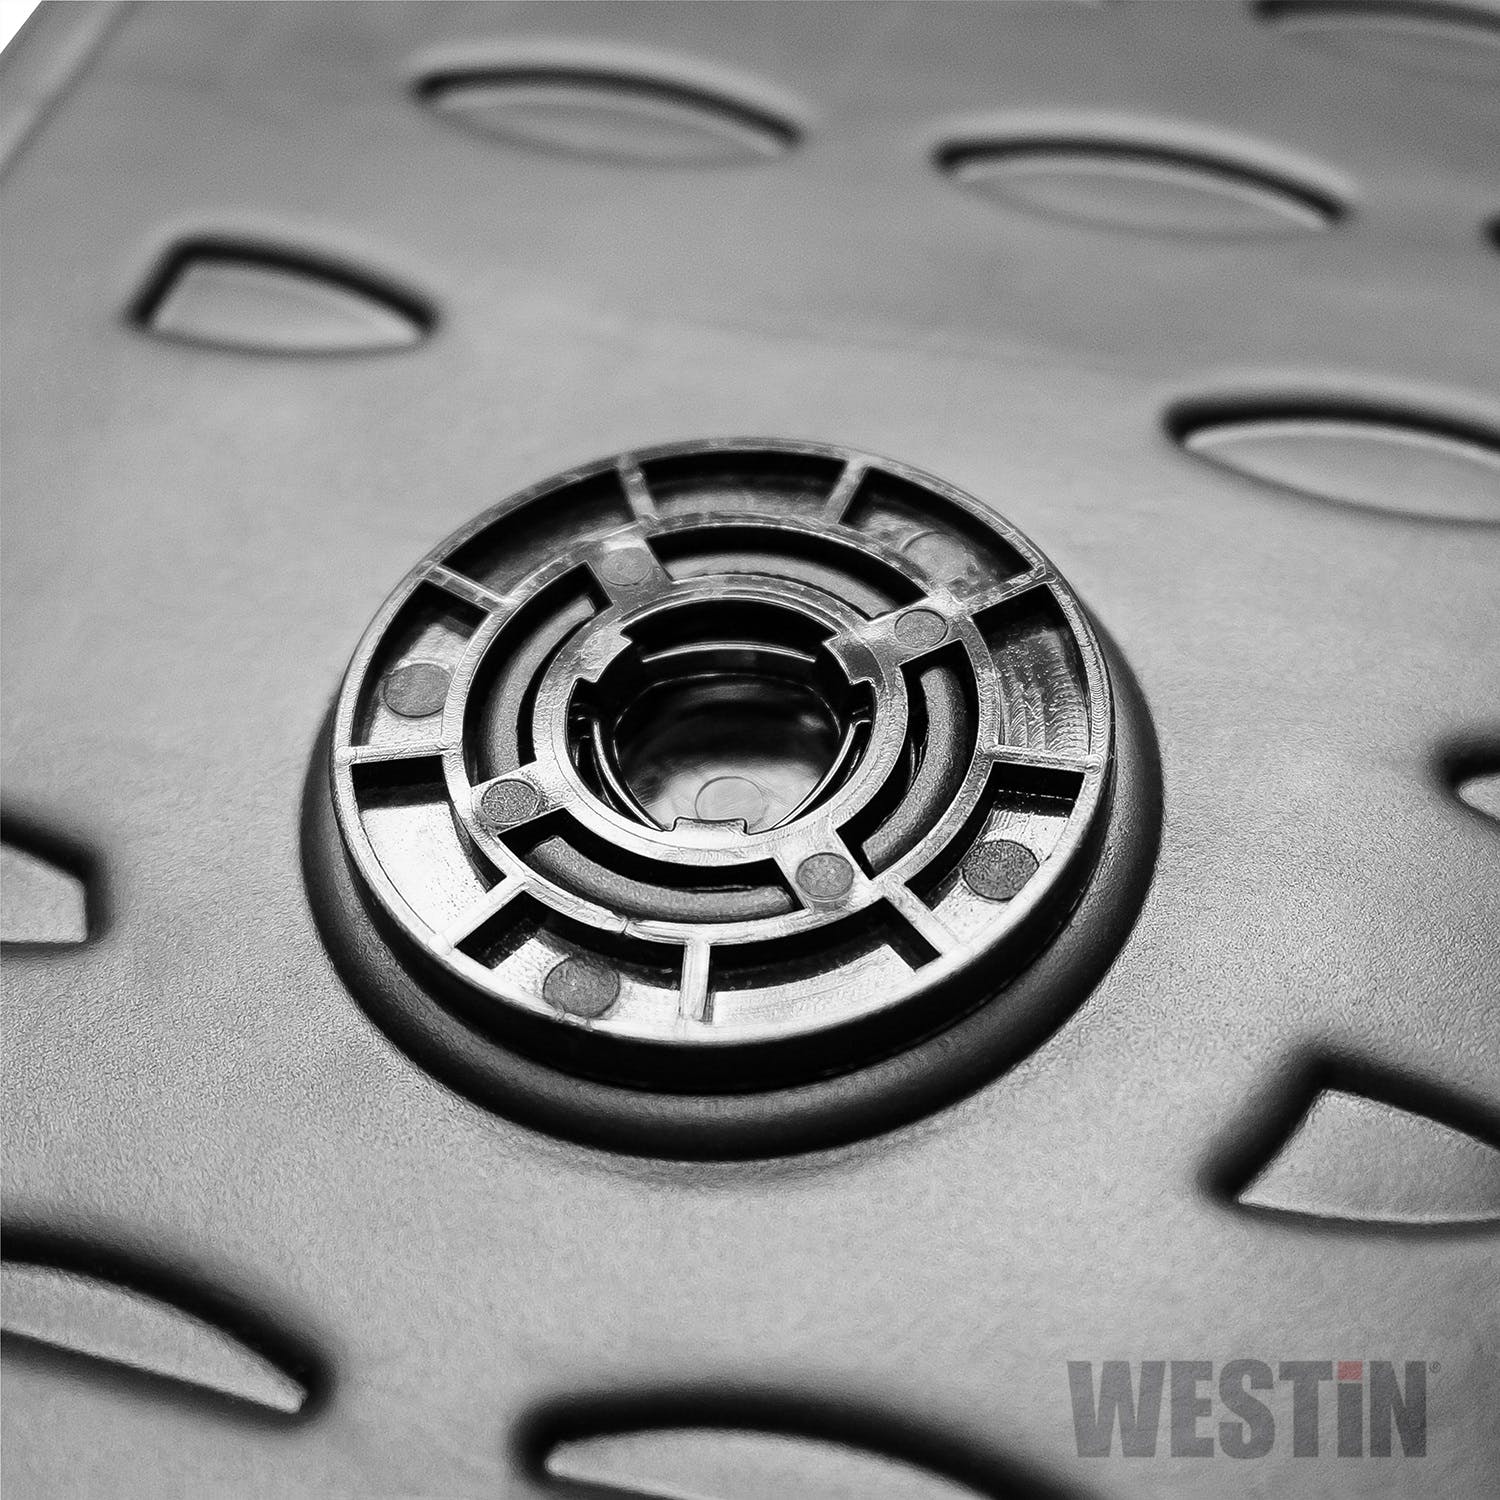 Westin Automotive 74-15-21008 Profile Floor Liners Front Row Black